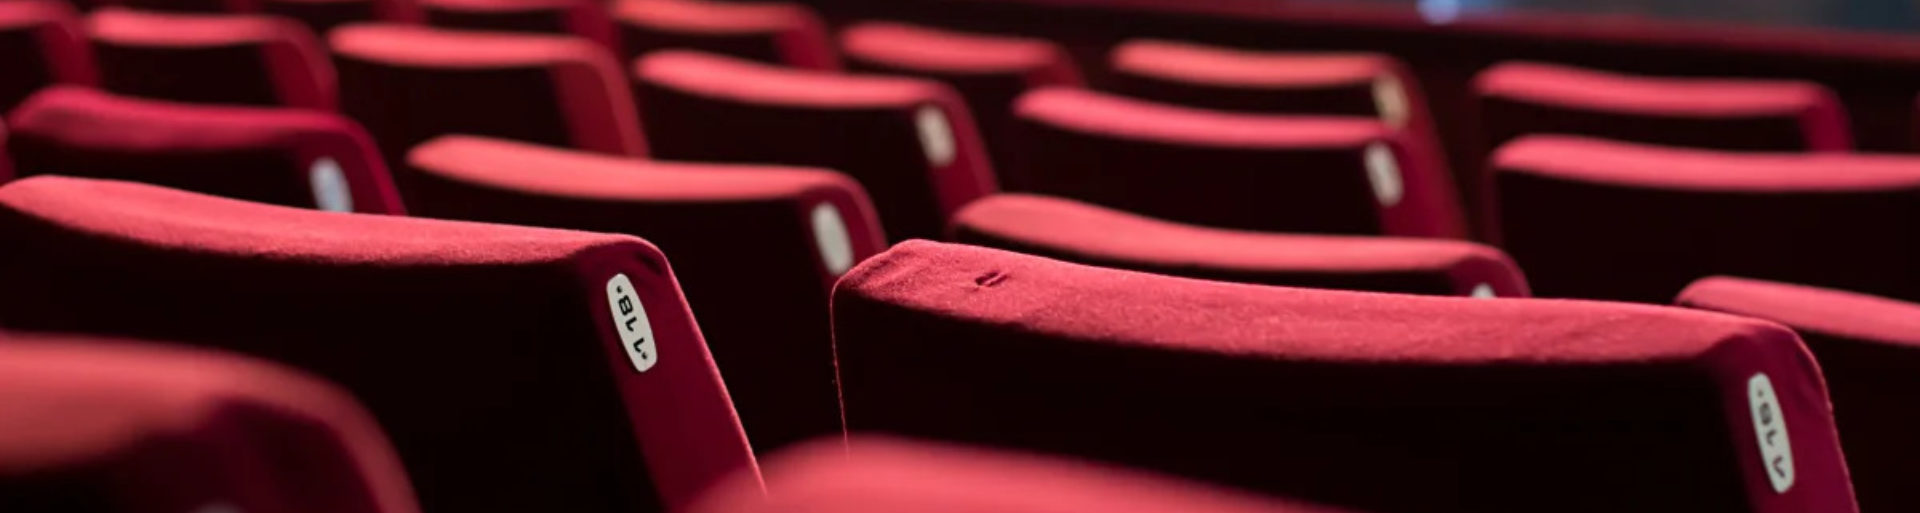 Movie Theater Shutterstock